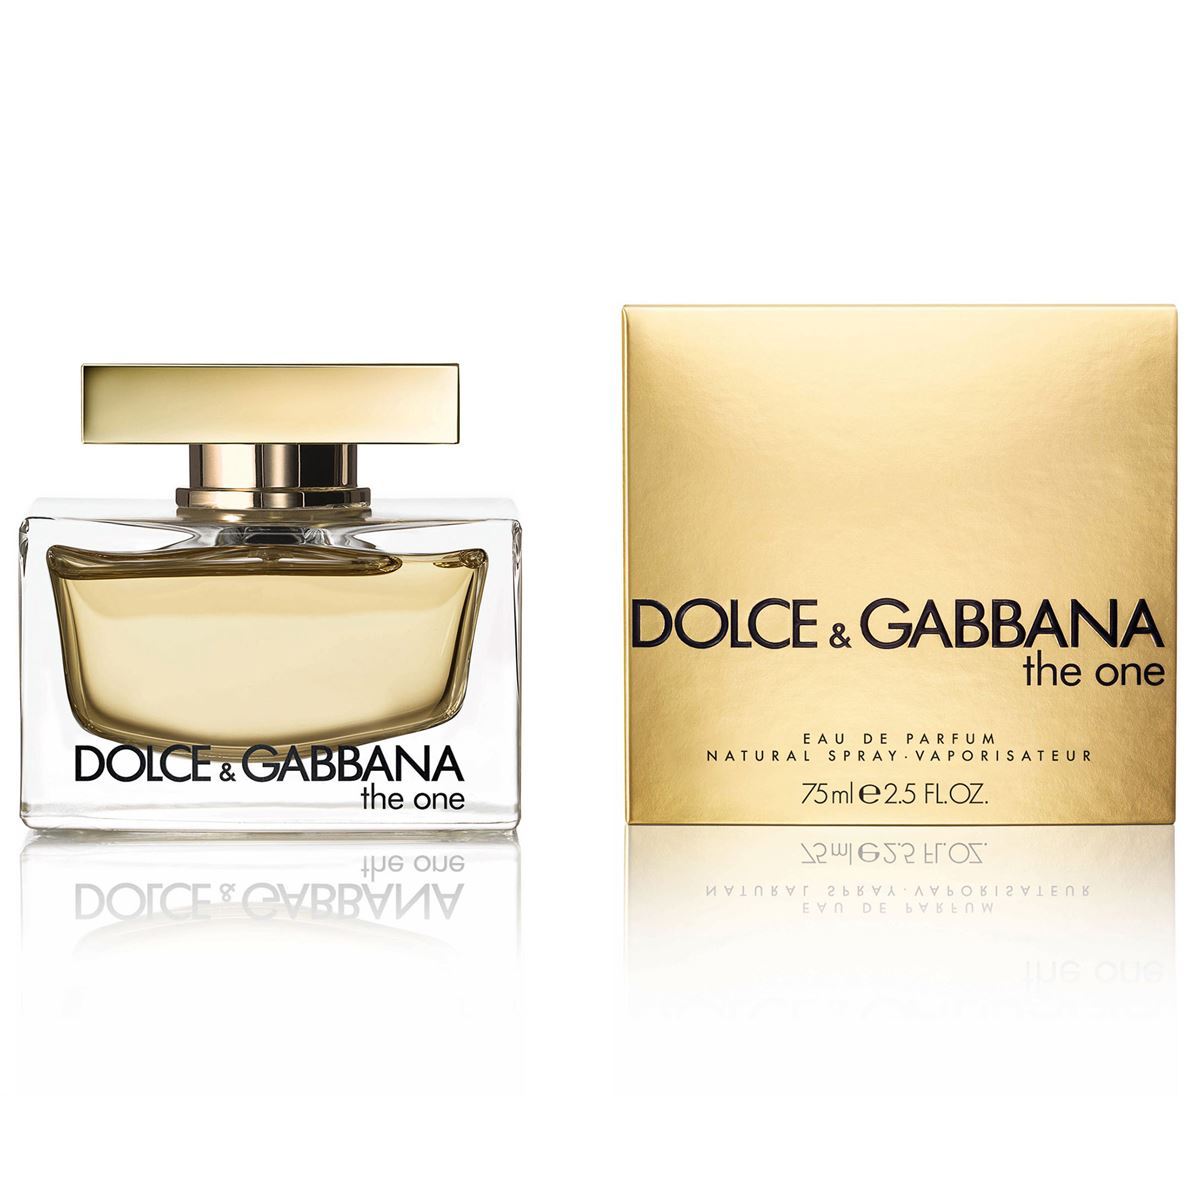 DOLCE & GABBANA - The One para mujer / 75 ml Eau De Parfum Spray